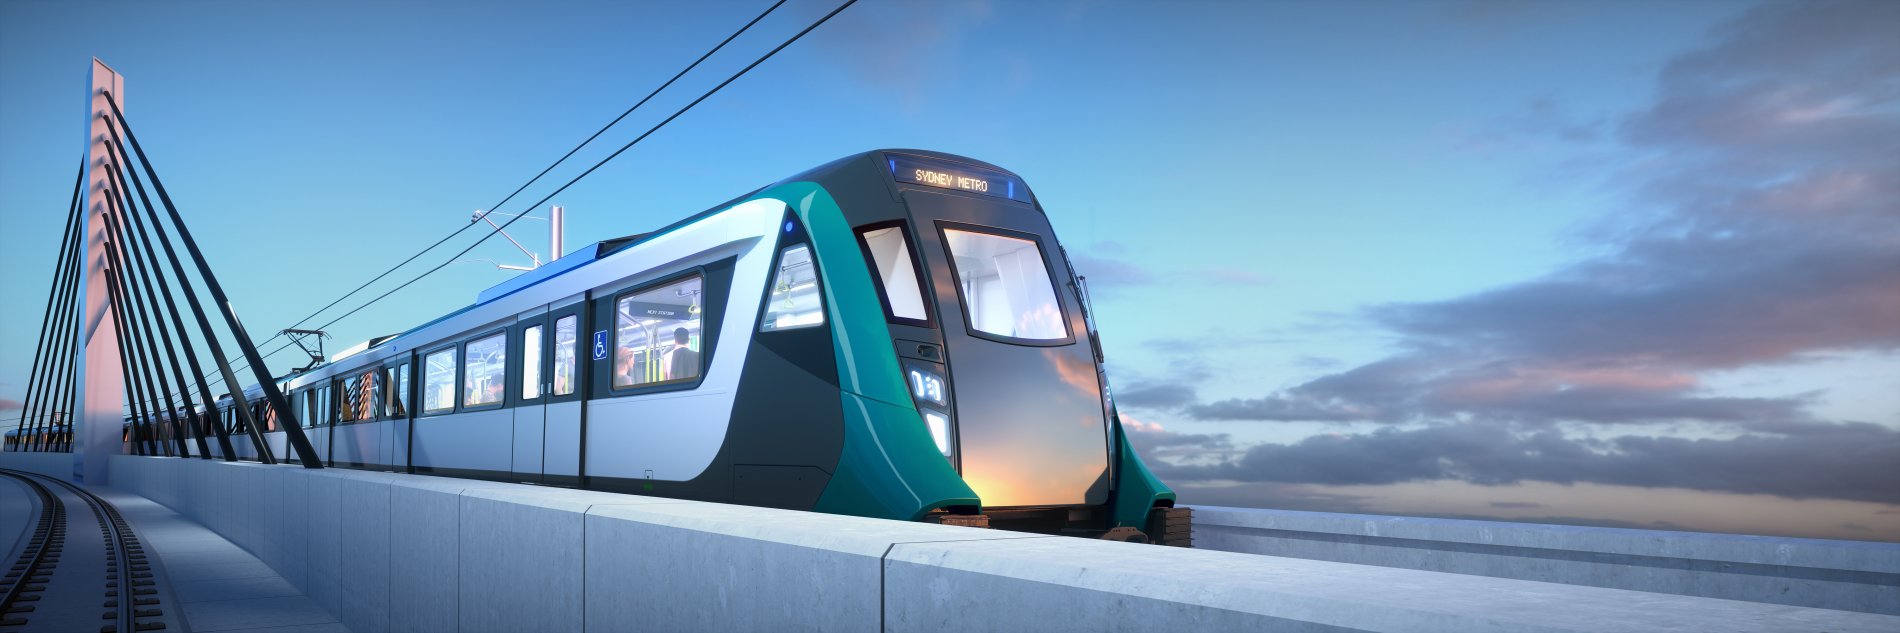 sydney-metro-trains